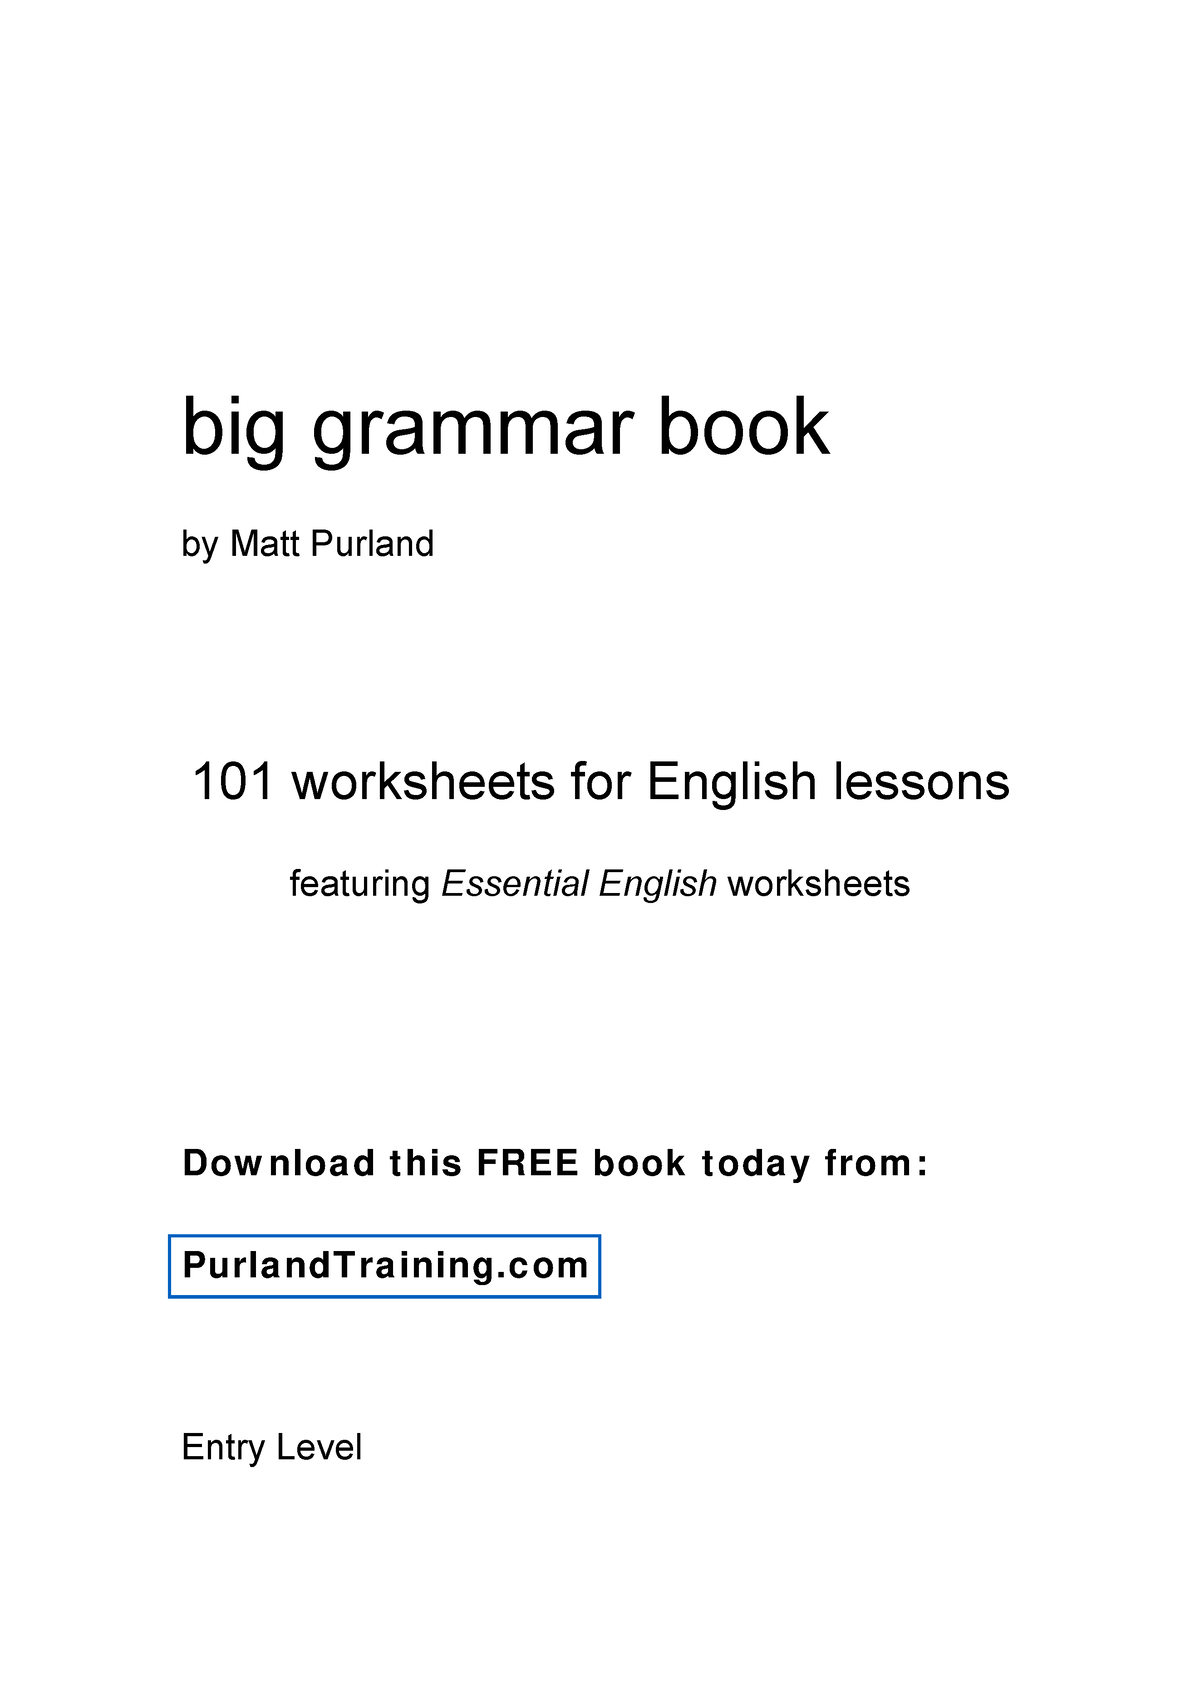 1-big-grammar-book-big-grammar-book-by-matt-purland-101-worksheets-for-english-lessons